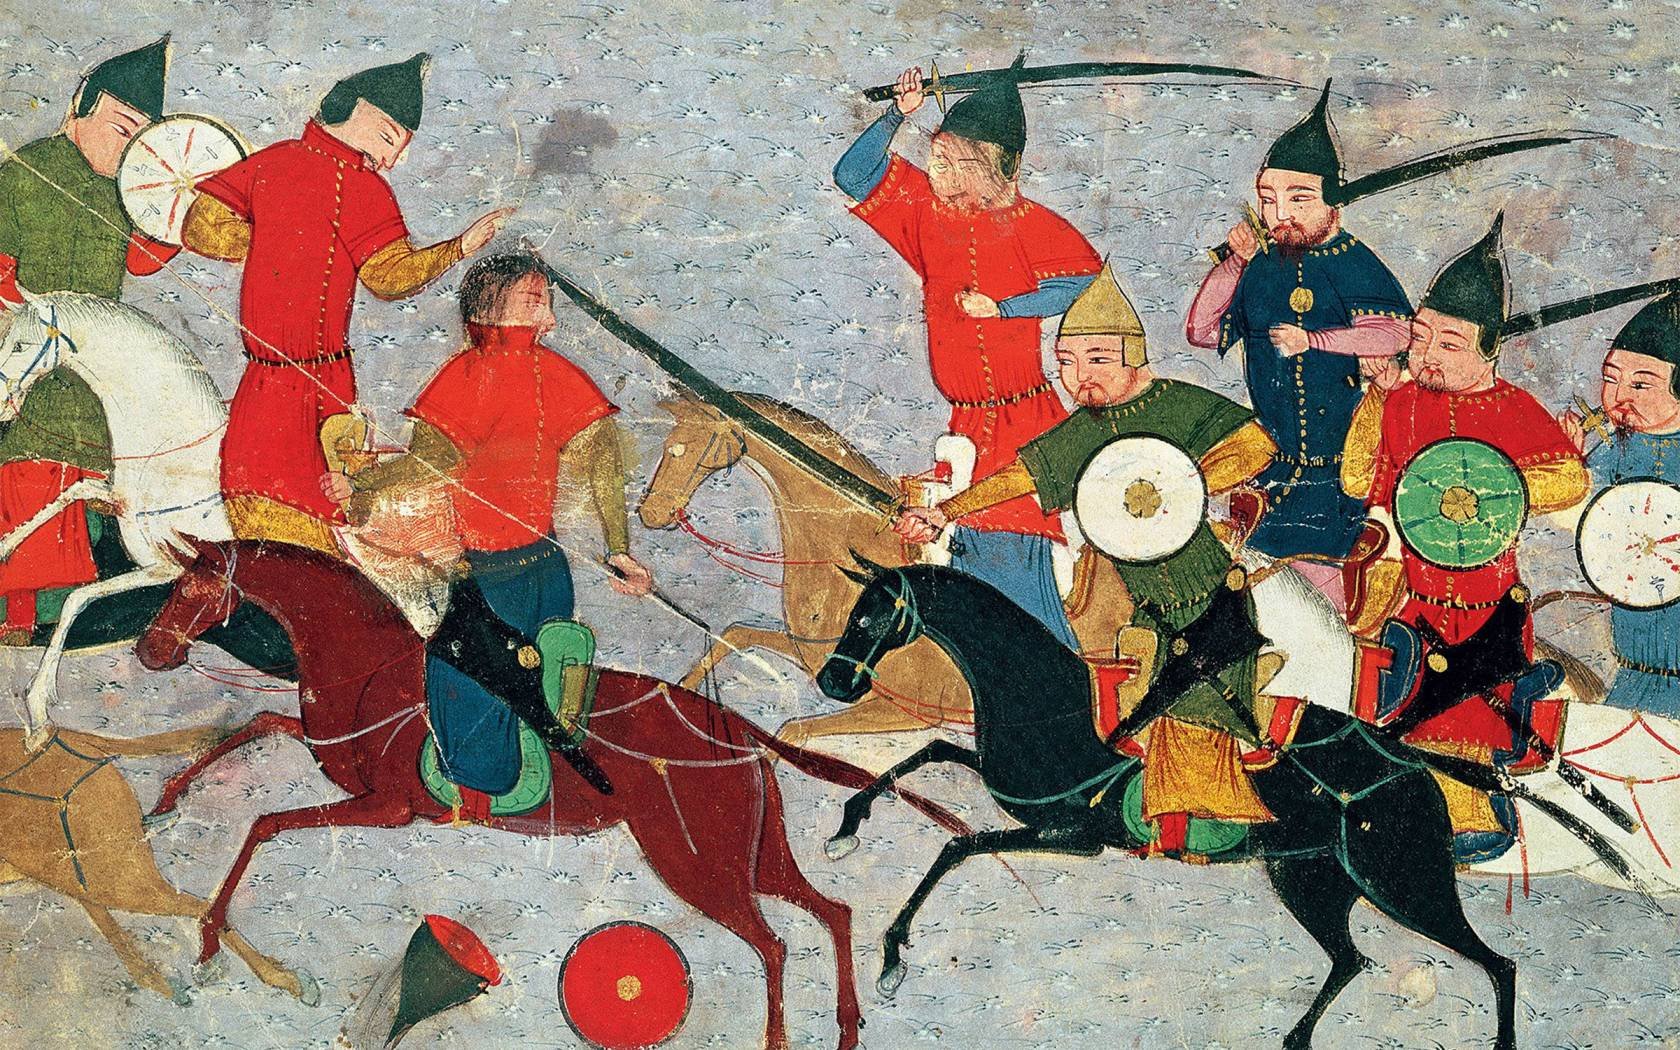 mongol empire genghis khan